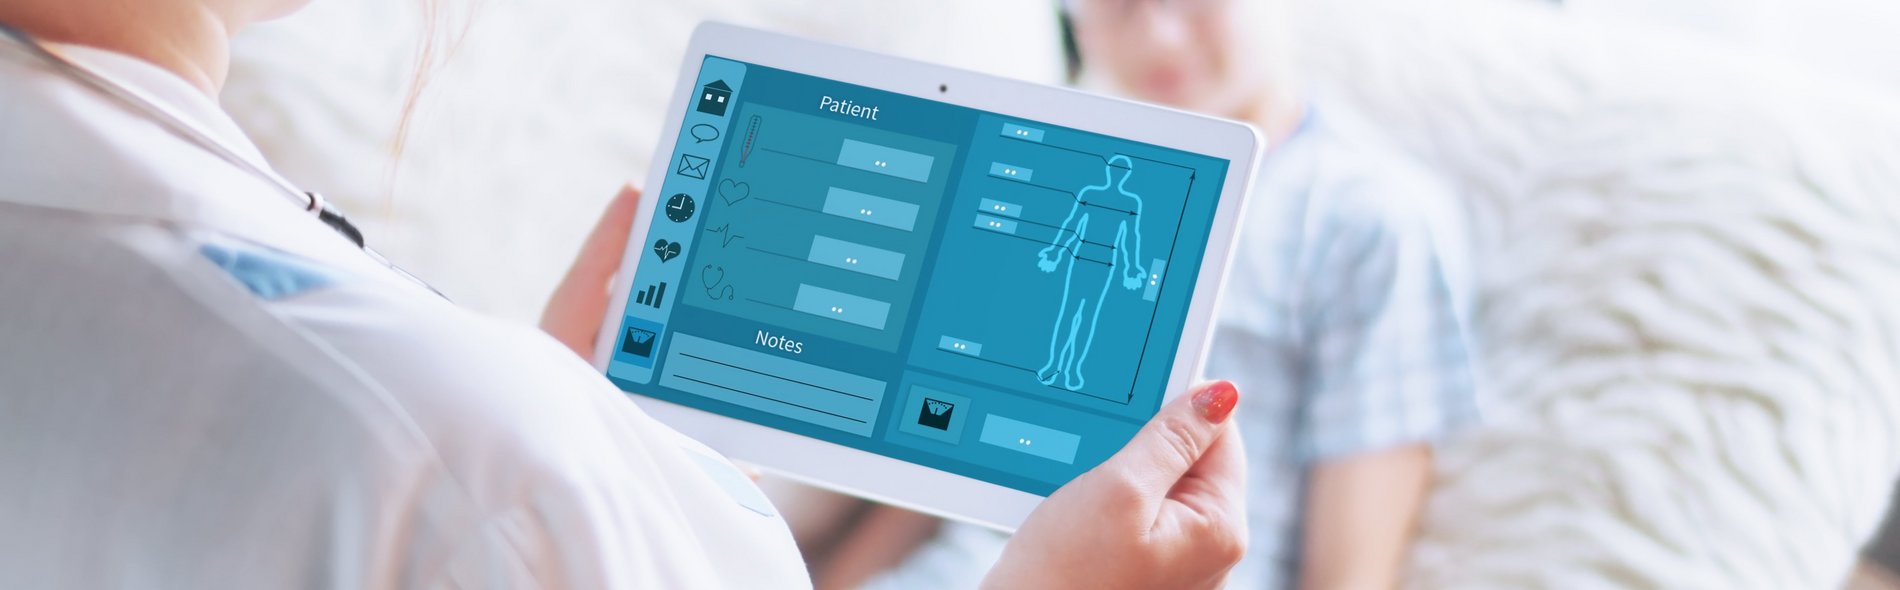 Digitale Patientenakte